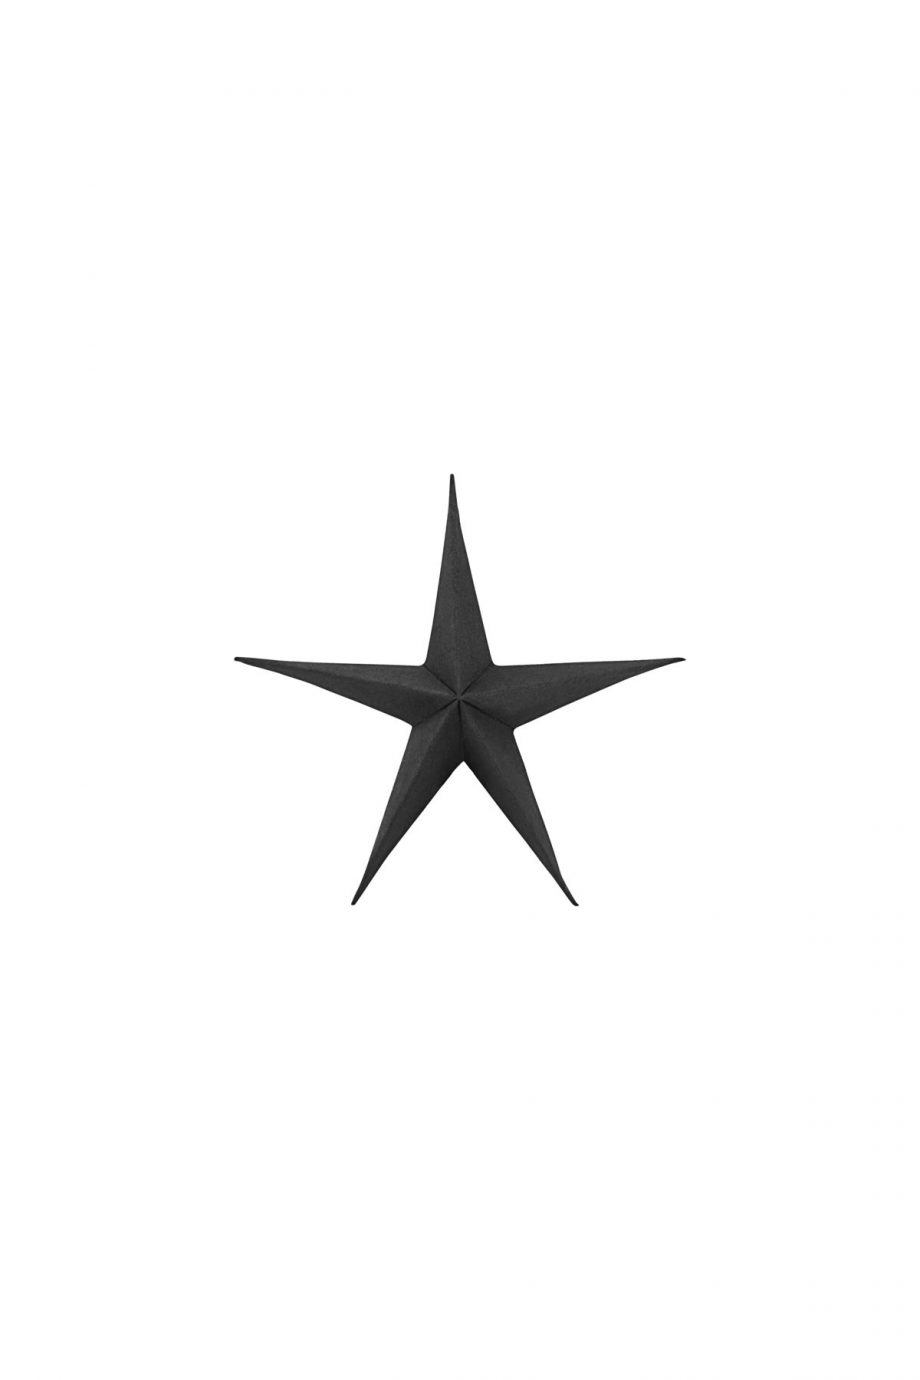 web1800 white ec0292 01 920x1380 - Stjerne - "Star" sort - 15 cm